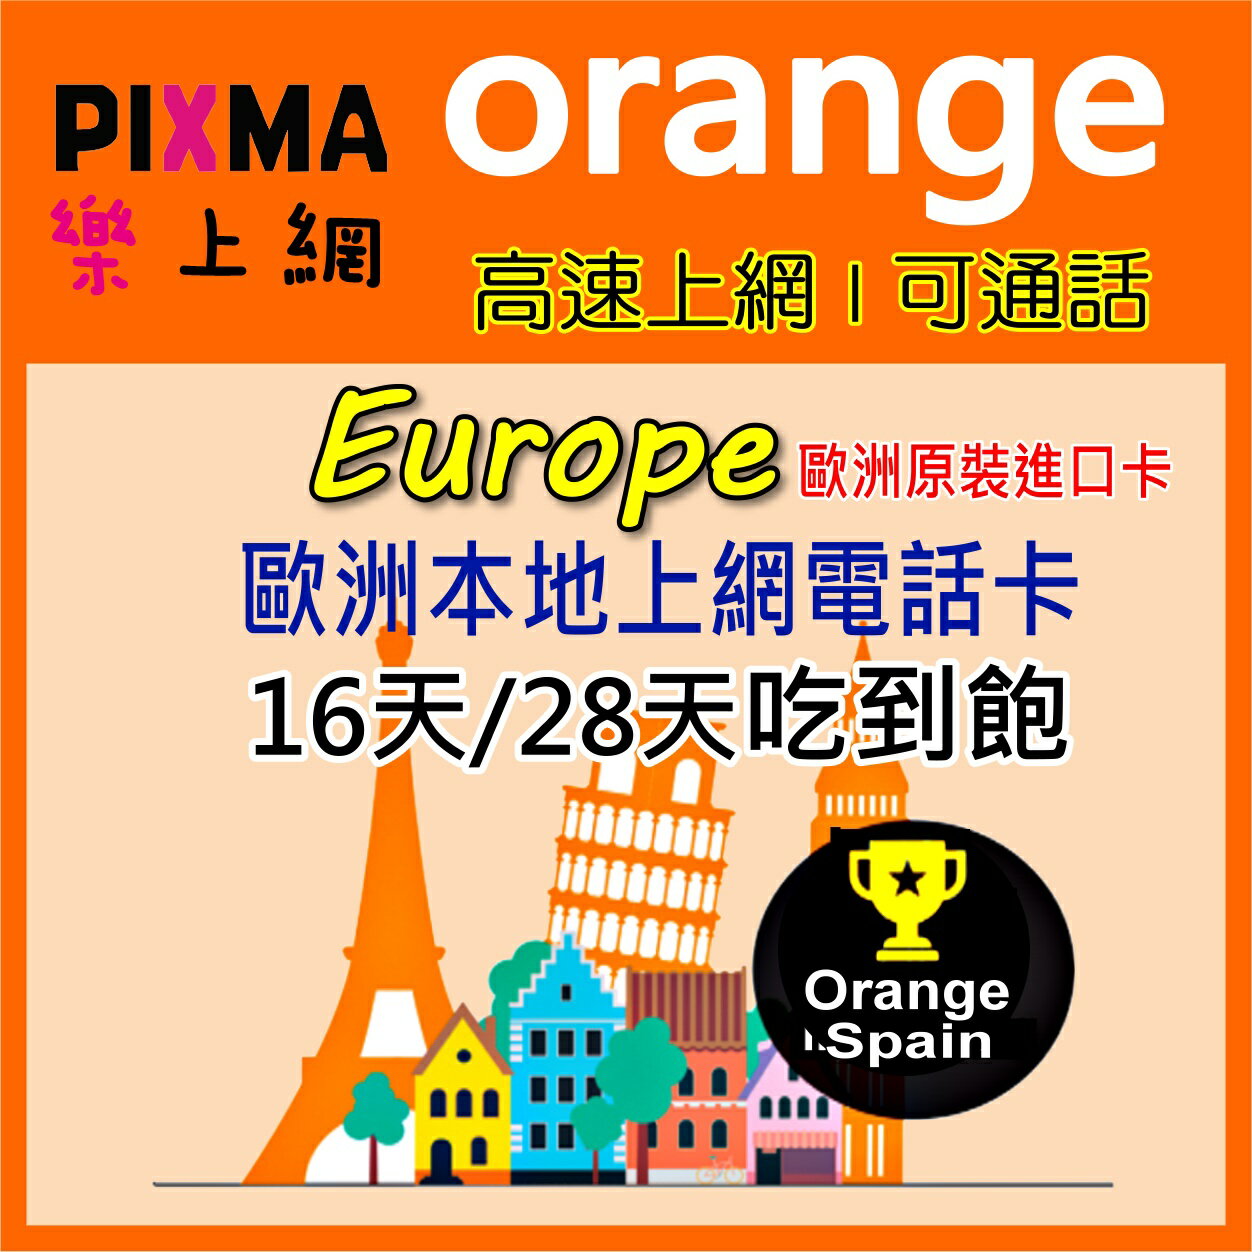 Orange 歐洲30國上網卡吃到飽6GB-22GB 法國希臘義大利葡萄牙奧地利捷克 歐盟上網電話卡SIM卡【樂上網】